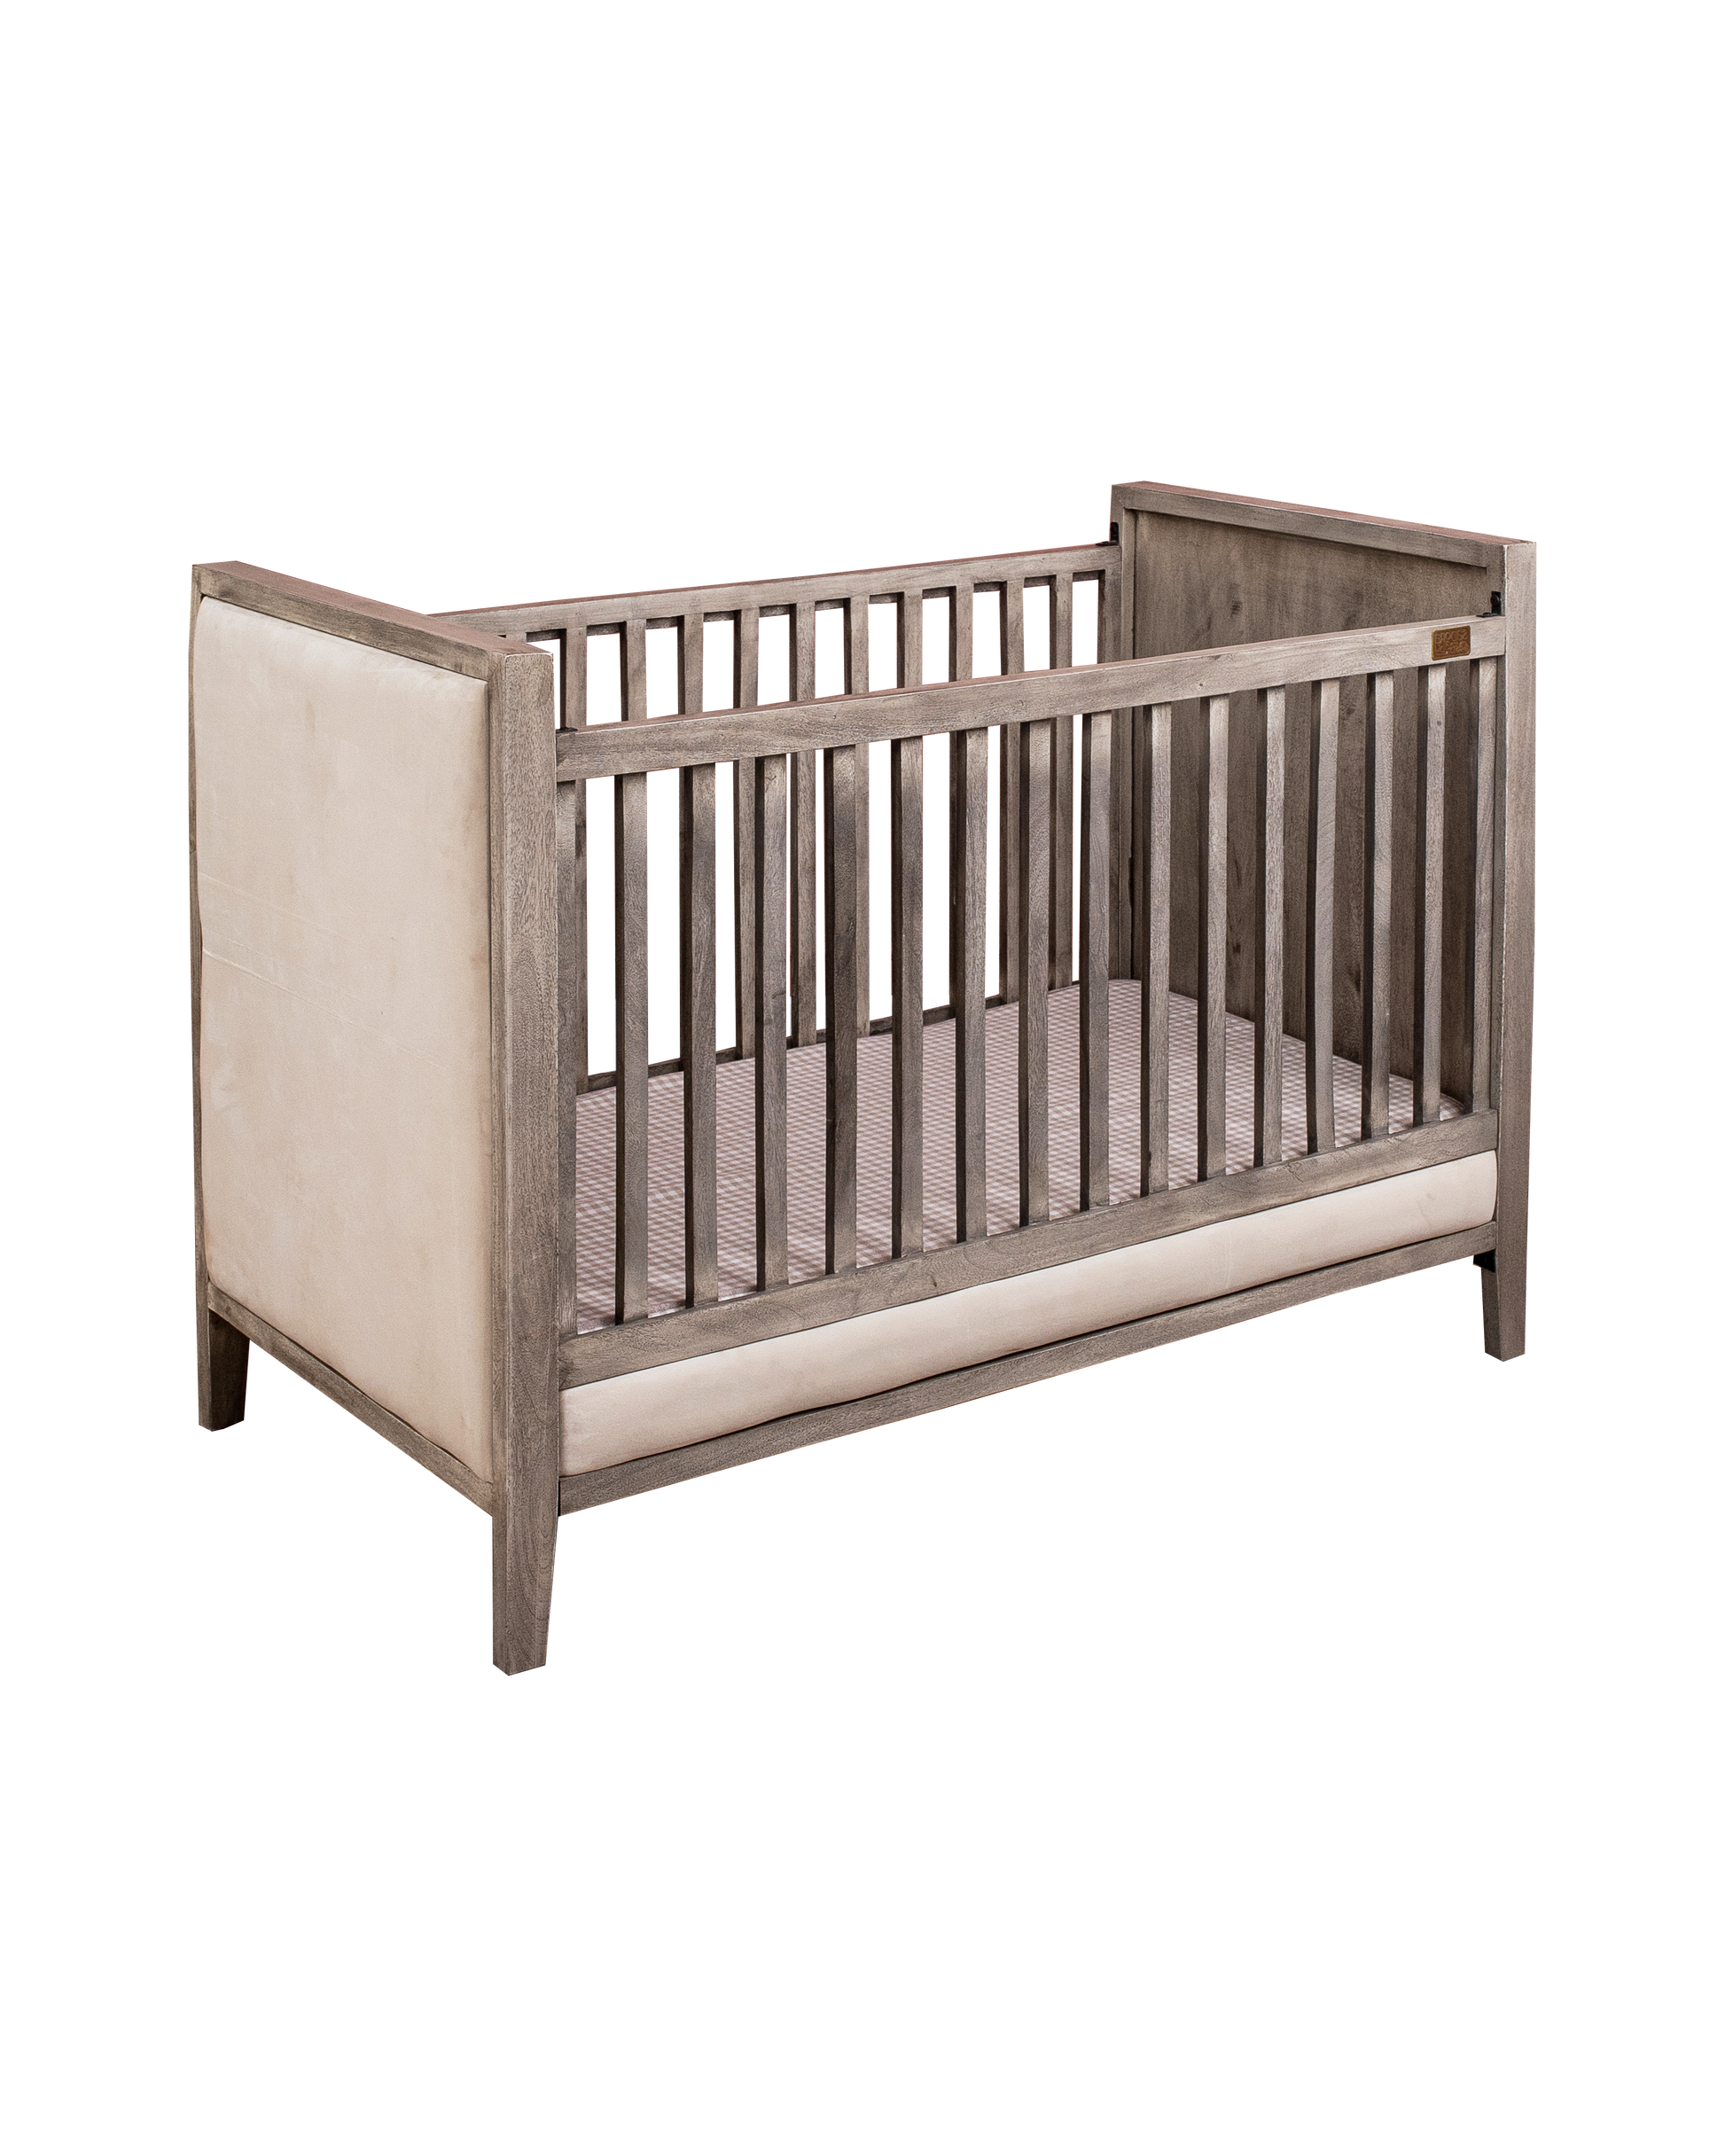 Buy Wooden Baby Cot With Velvet Upholstery - Ash Grey Online - SkilloToys.com